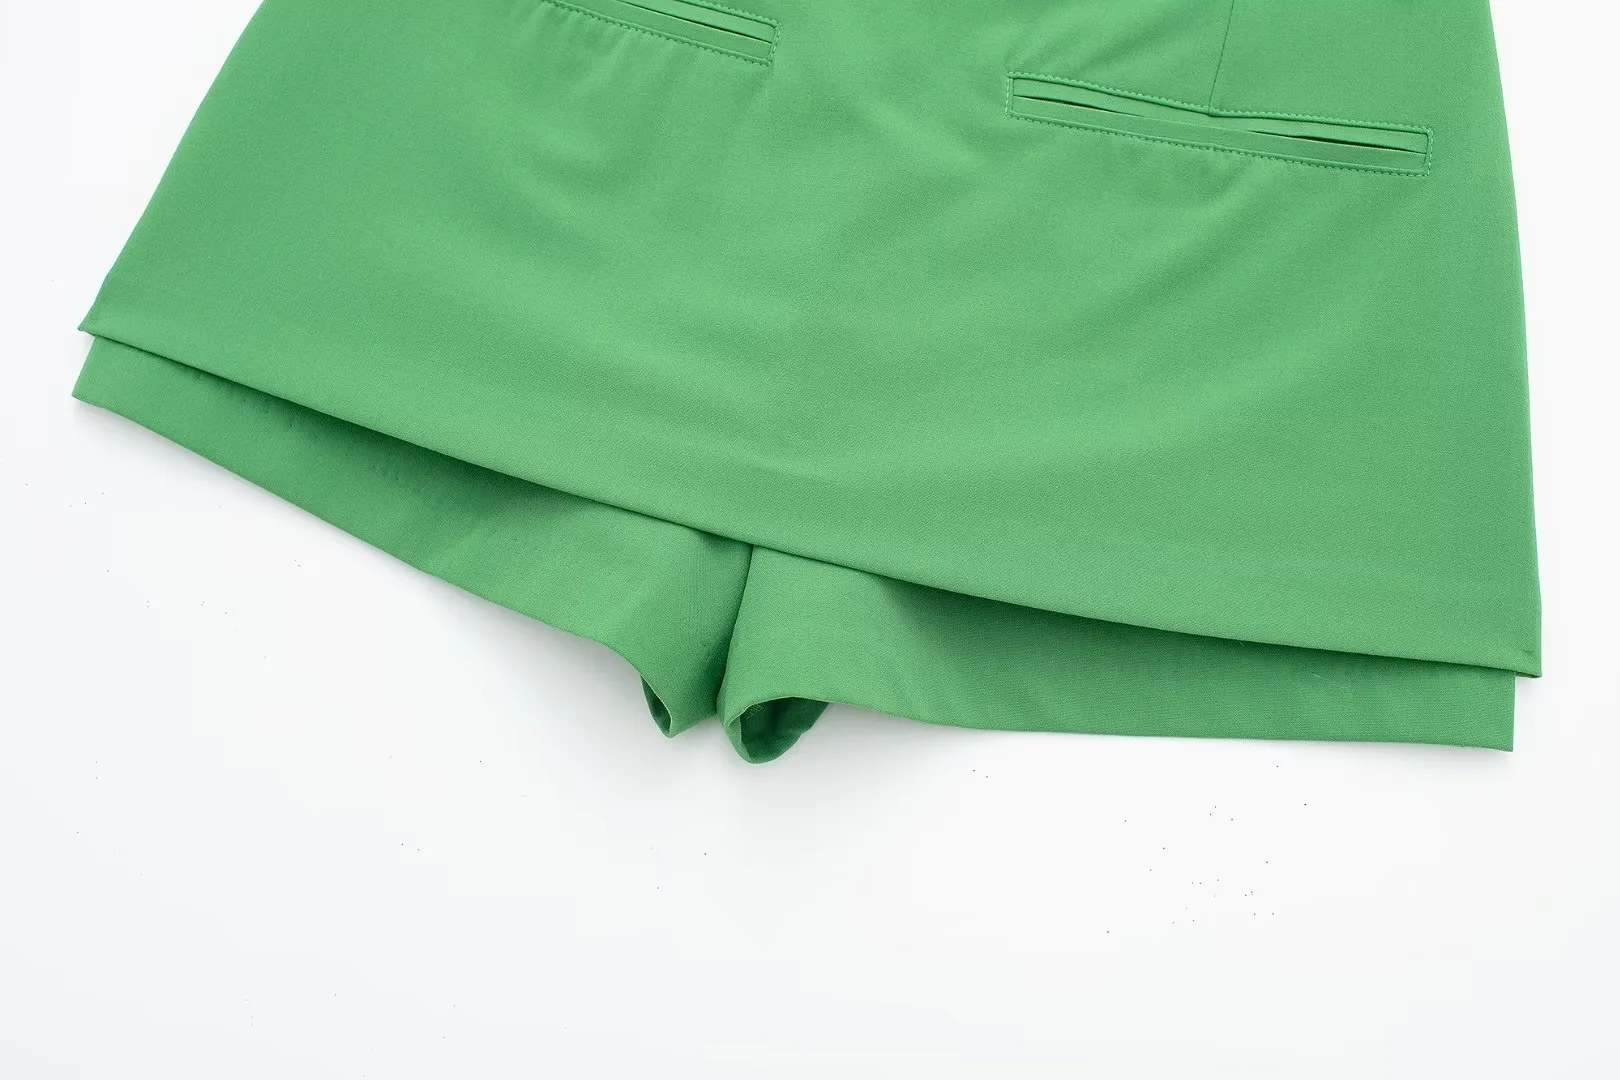 Fashion Green Blended Layered Culottes,Shorts